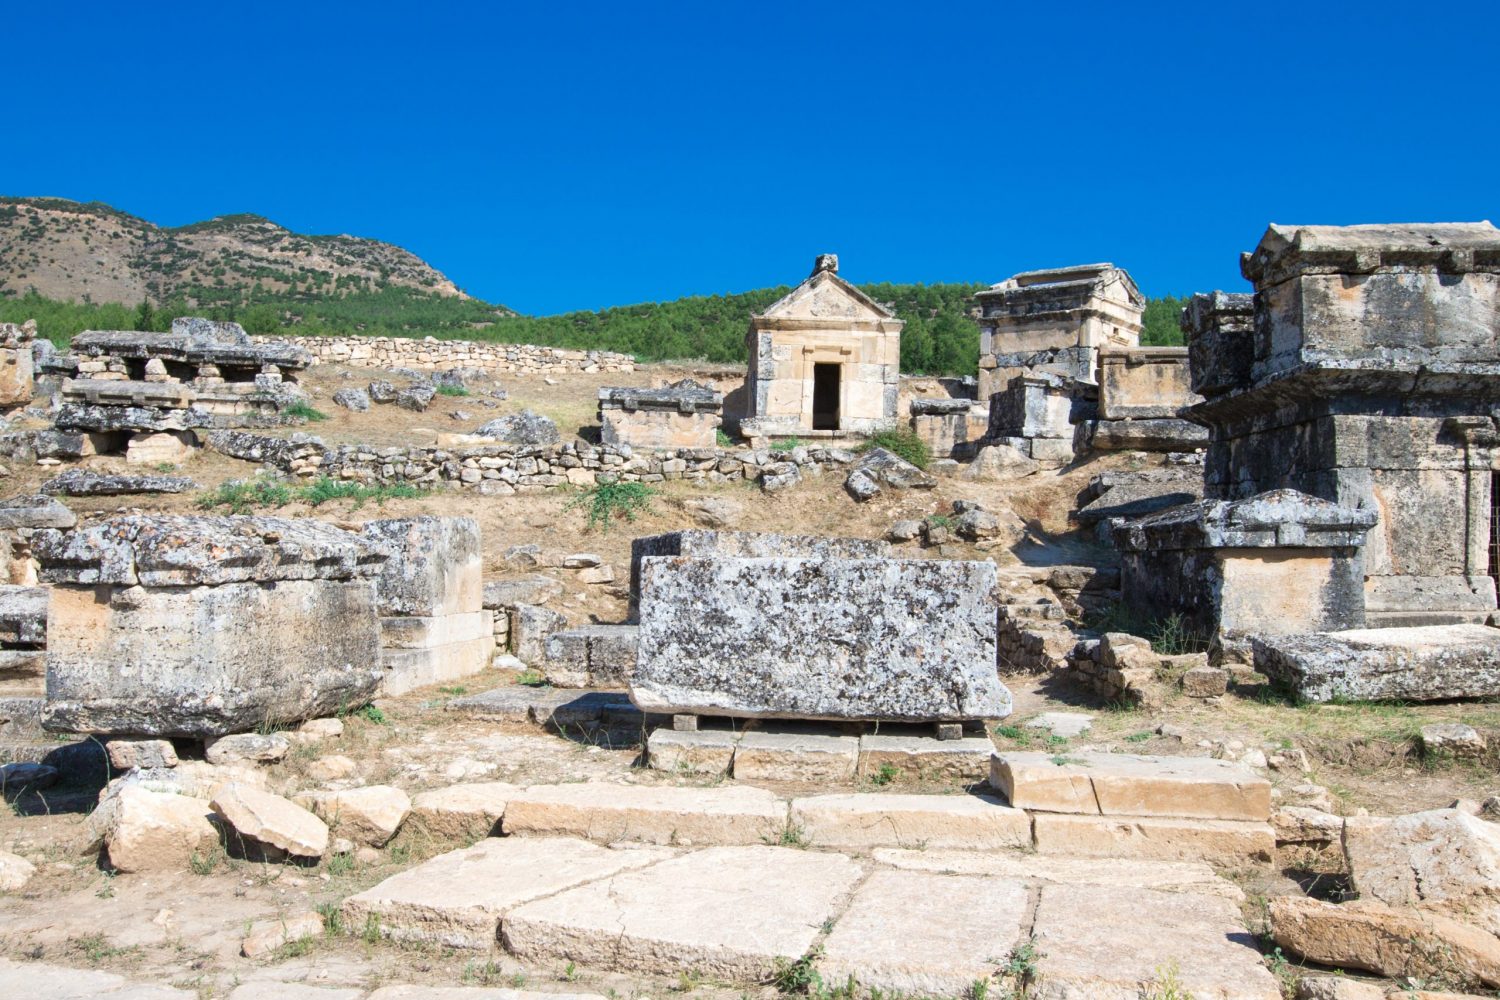 Ancient ruins in Hierapolis, Pamukkale, Turkey.